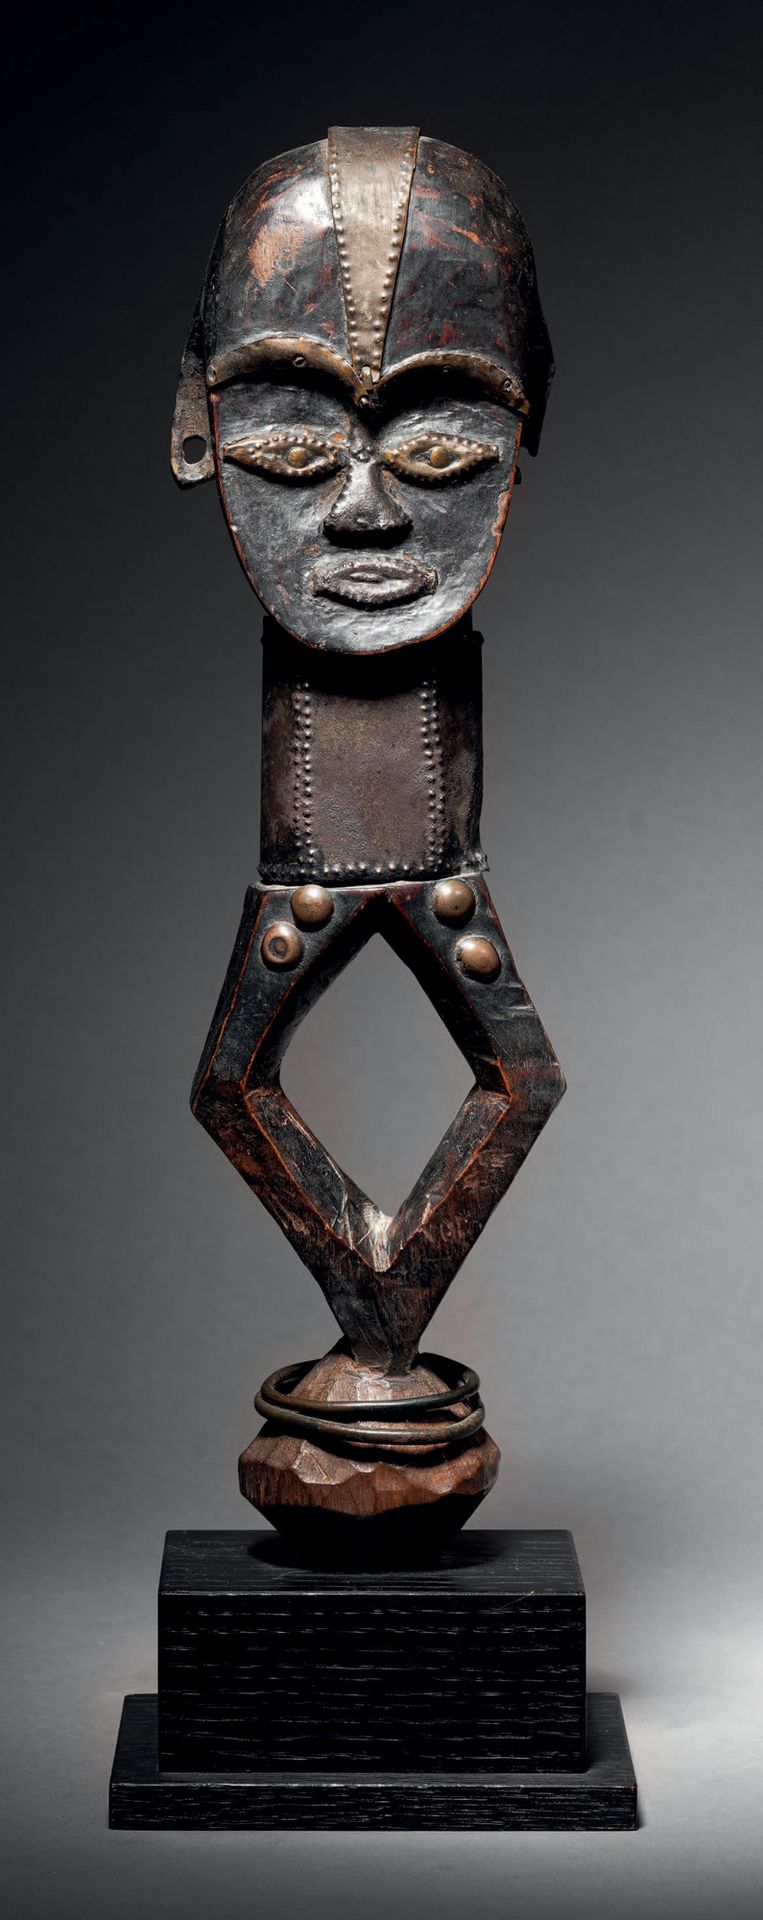 Null Ɵ Mbumba, Tsogho, Gabon
铜，装饰钉
高30厘米
Tshogo mbumba, Gabon
高11 ¾英寸
加蓬中部的文化马赛克&hellip;